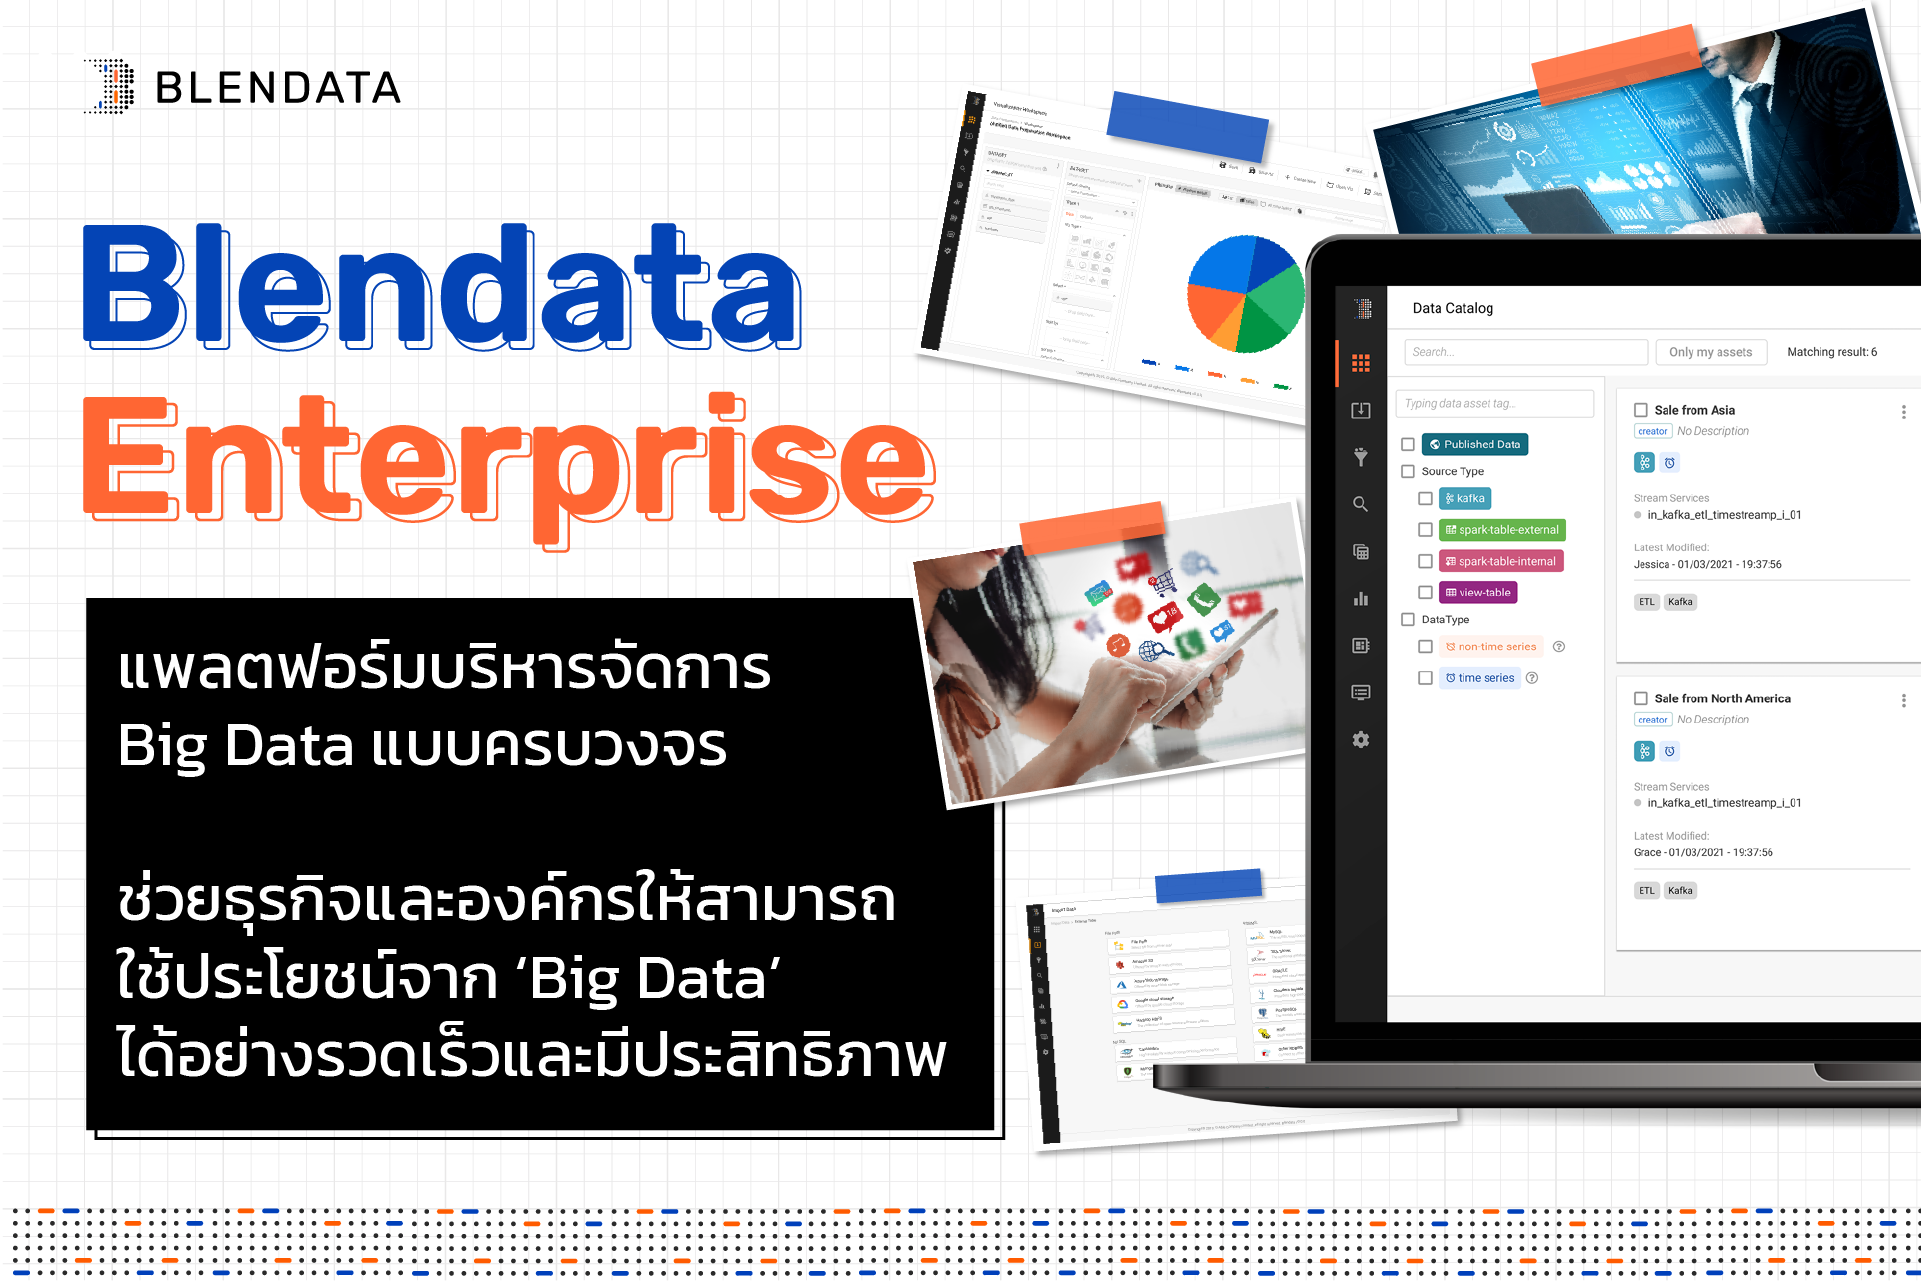 Blendata Enterprise แพลตฟอร์มบริหารจัดการ Big Data แบบครบวงจร ช่วยธุรกิจและองค์กรให้สามารถใช้ประโยชน์จาก ‘Big Data’ ได้อย่างรวดเร็วและมีประสิทธิภาพ